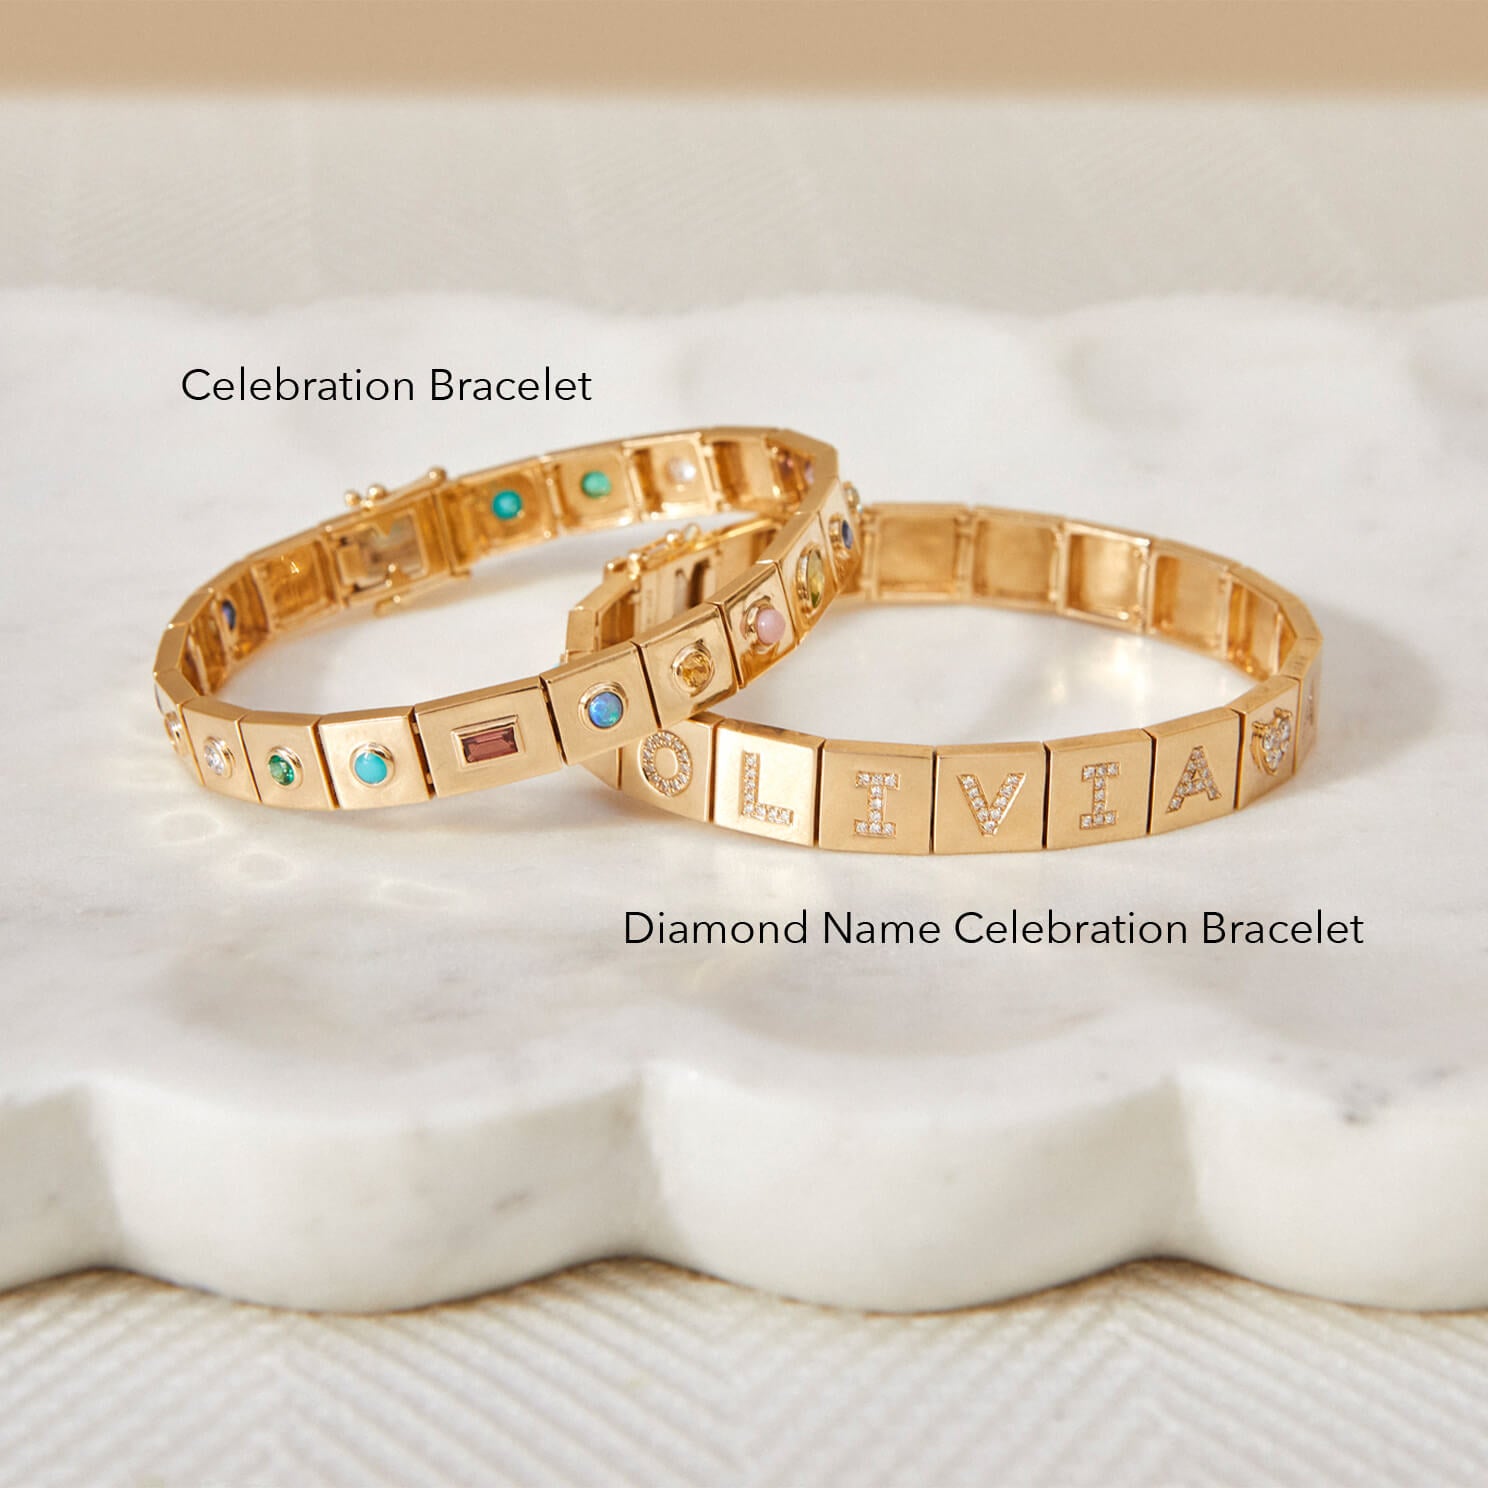 Diamond Name Celebration Bracelet